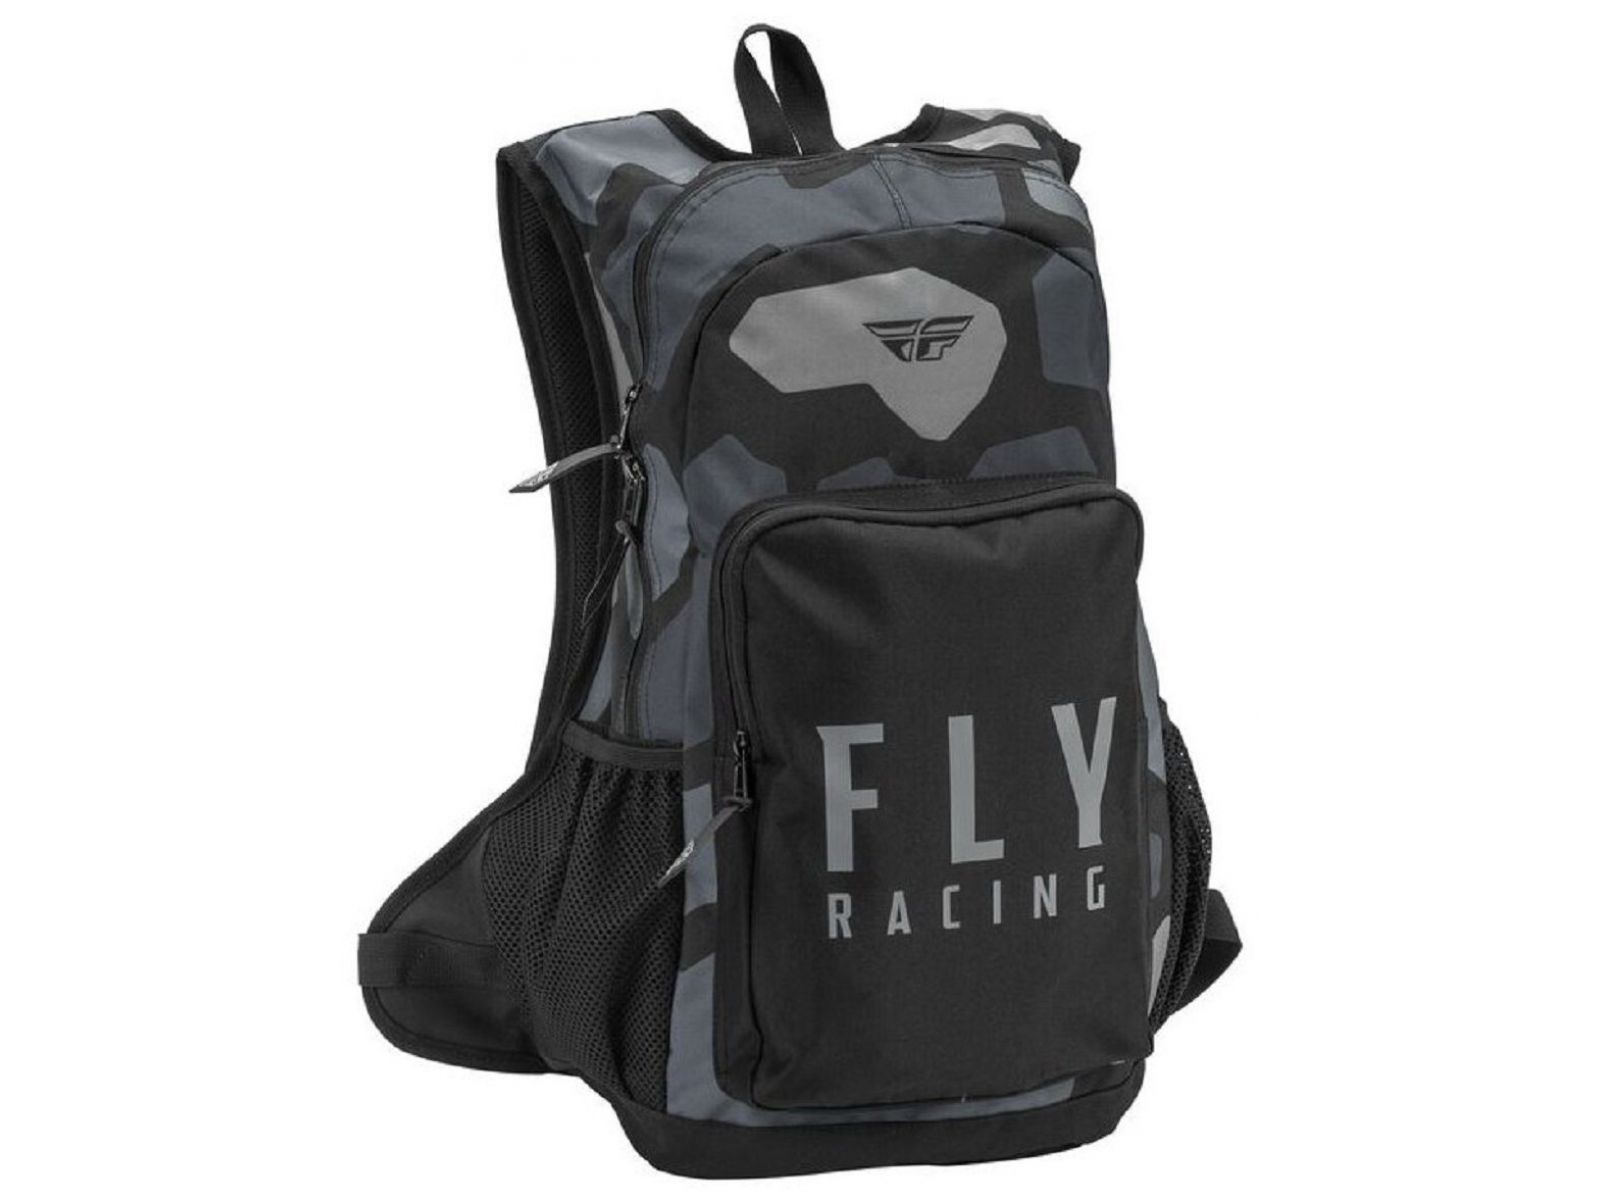 Рюкзак FLY RACING JUMP Grey/Black